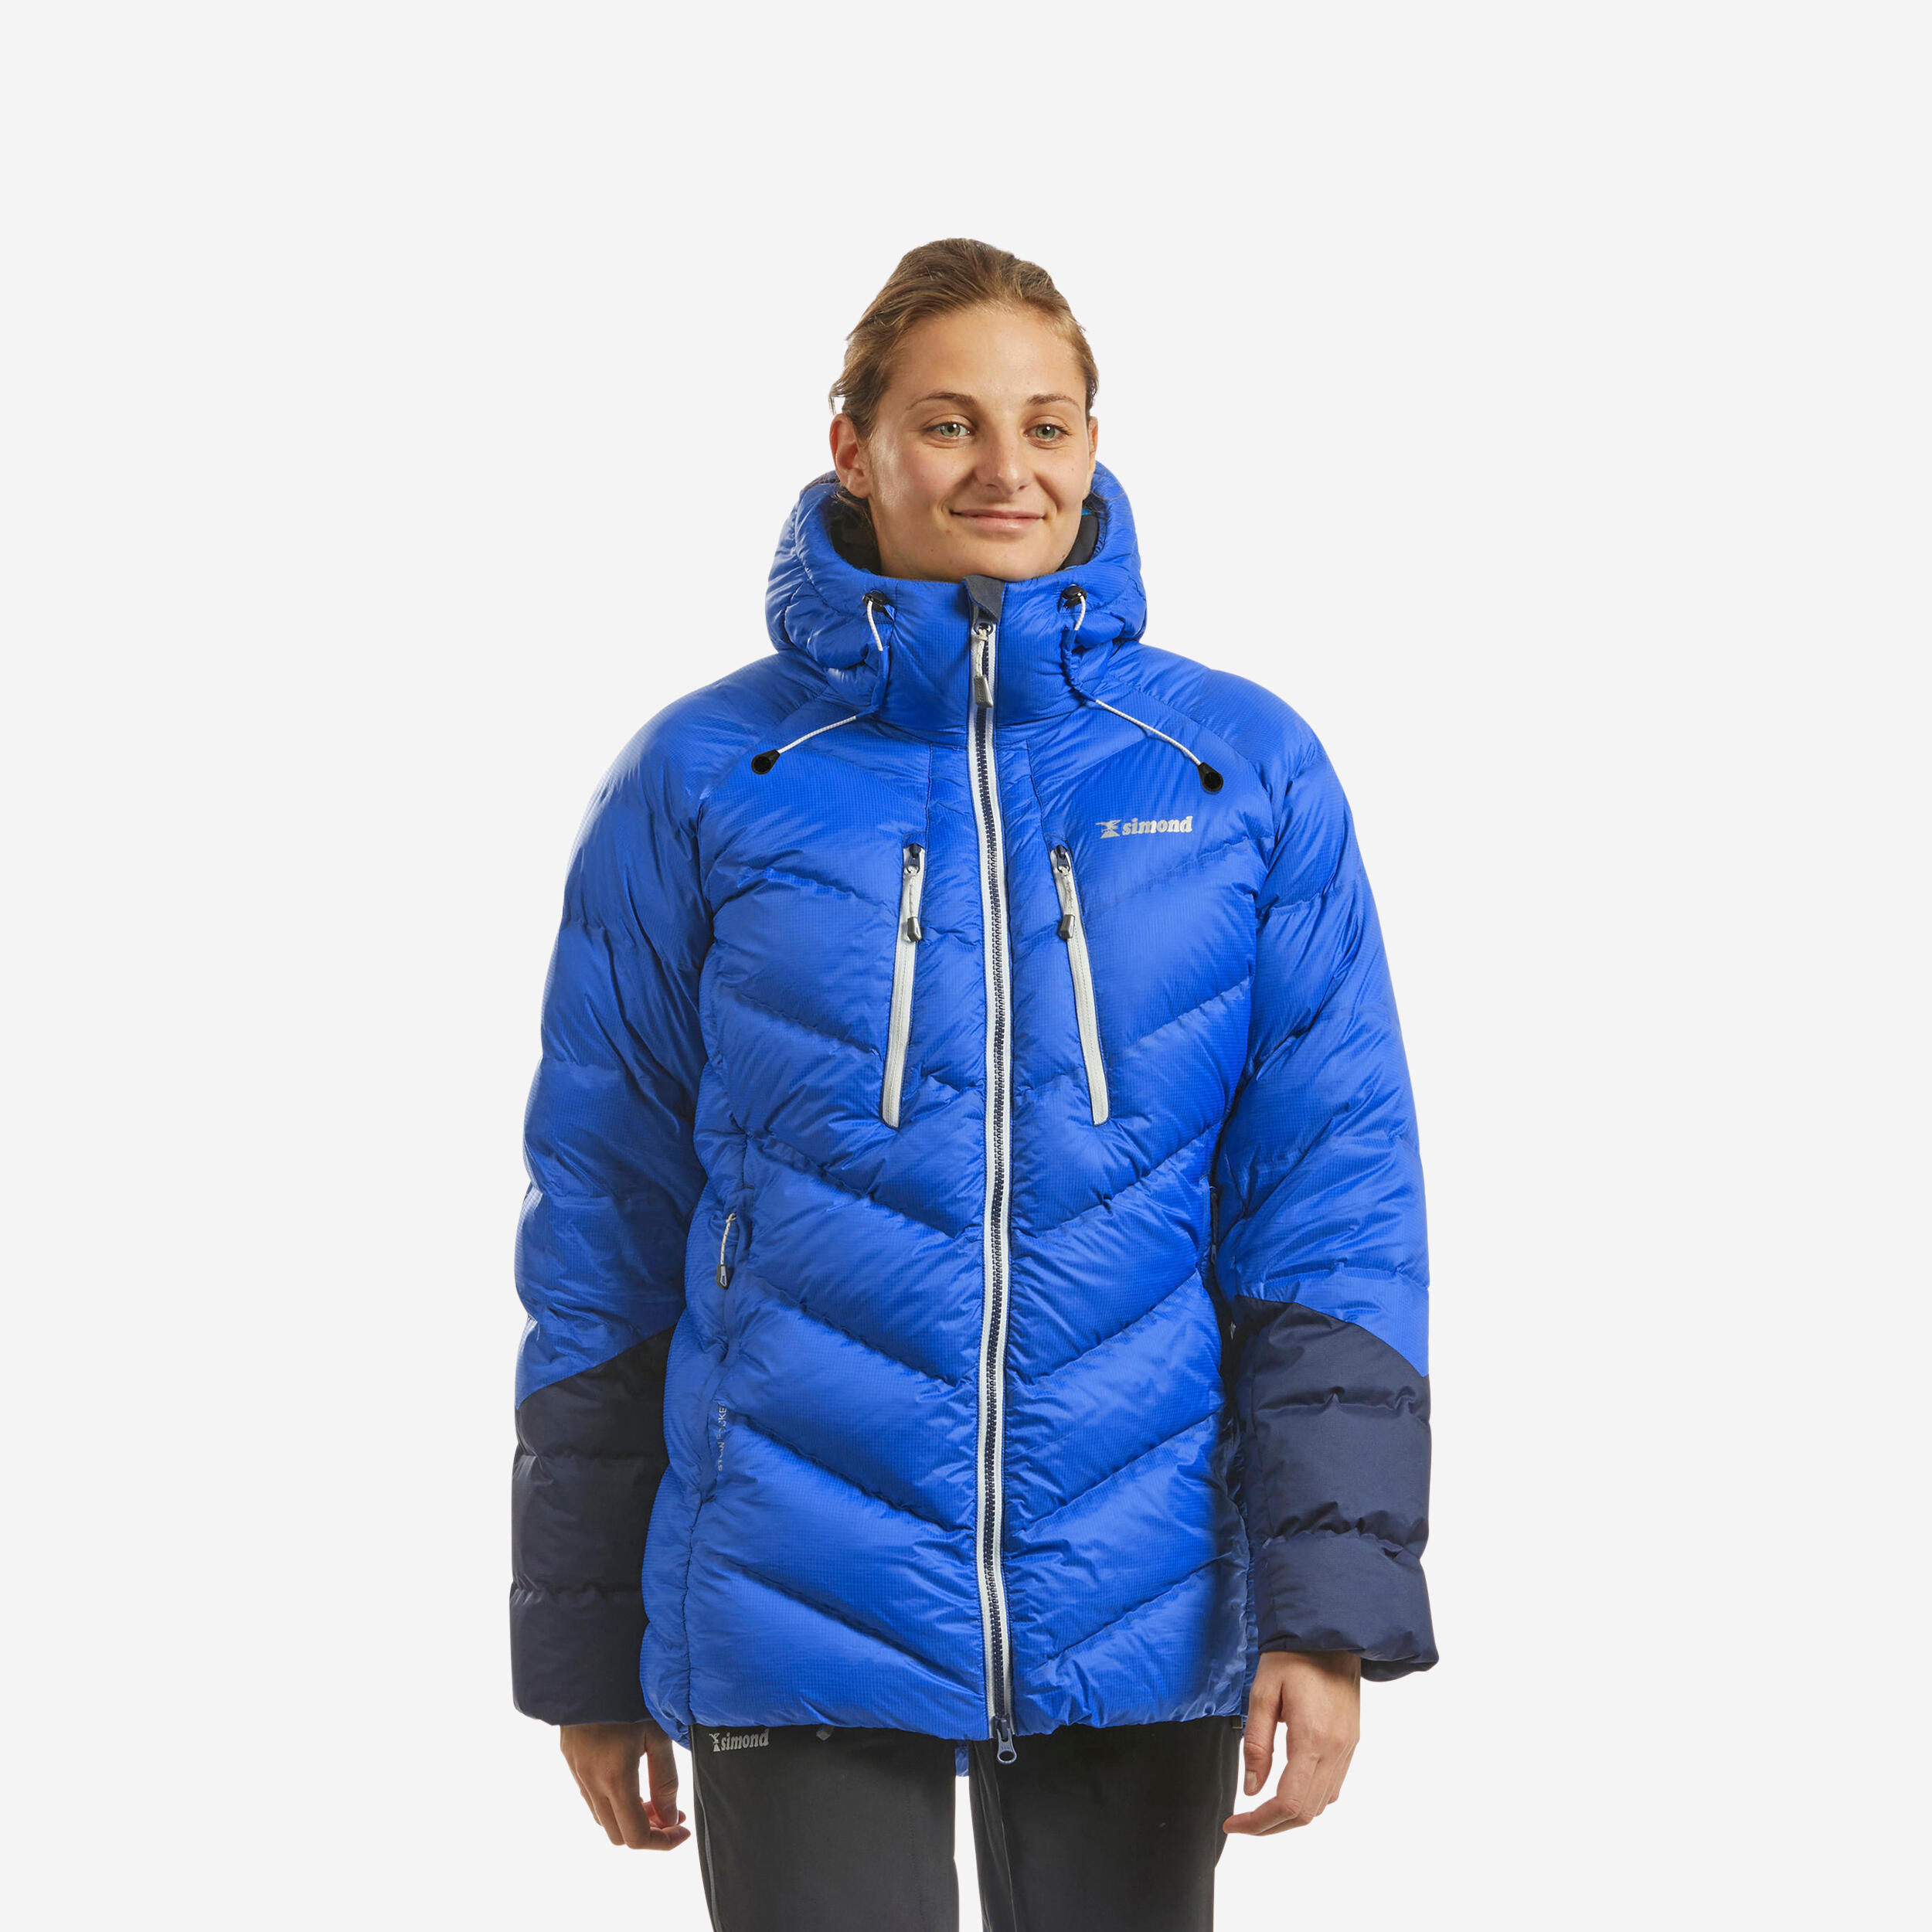 Women’s Down Winter Jacket - MT 500 Turquoise